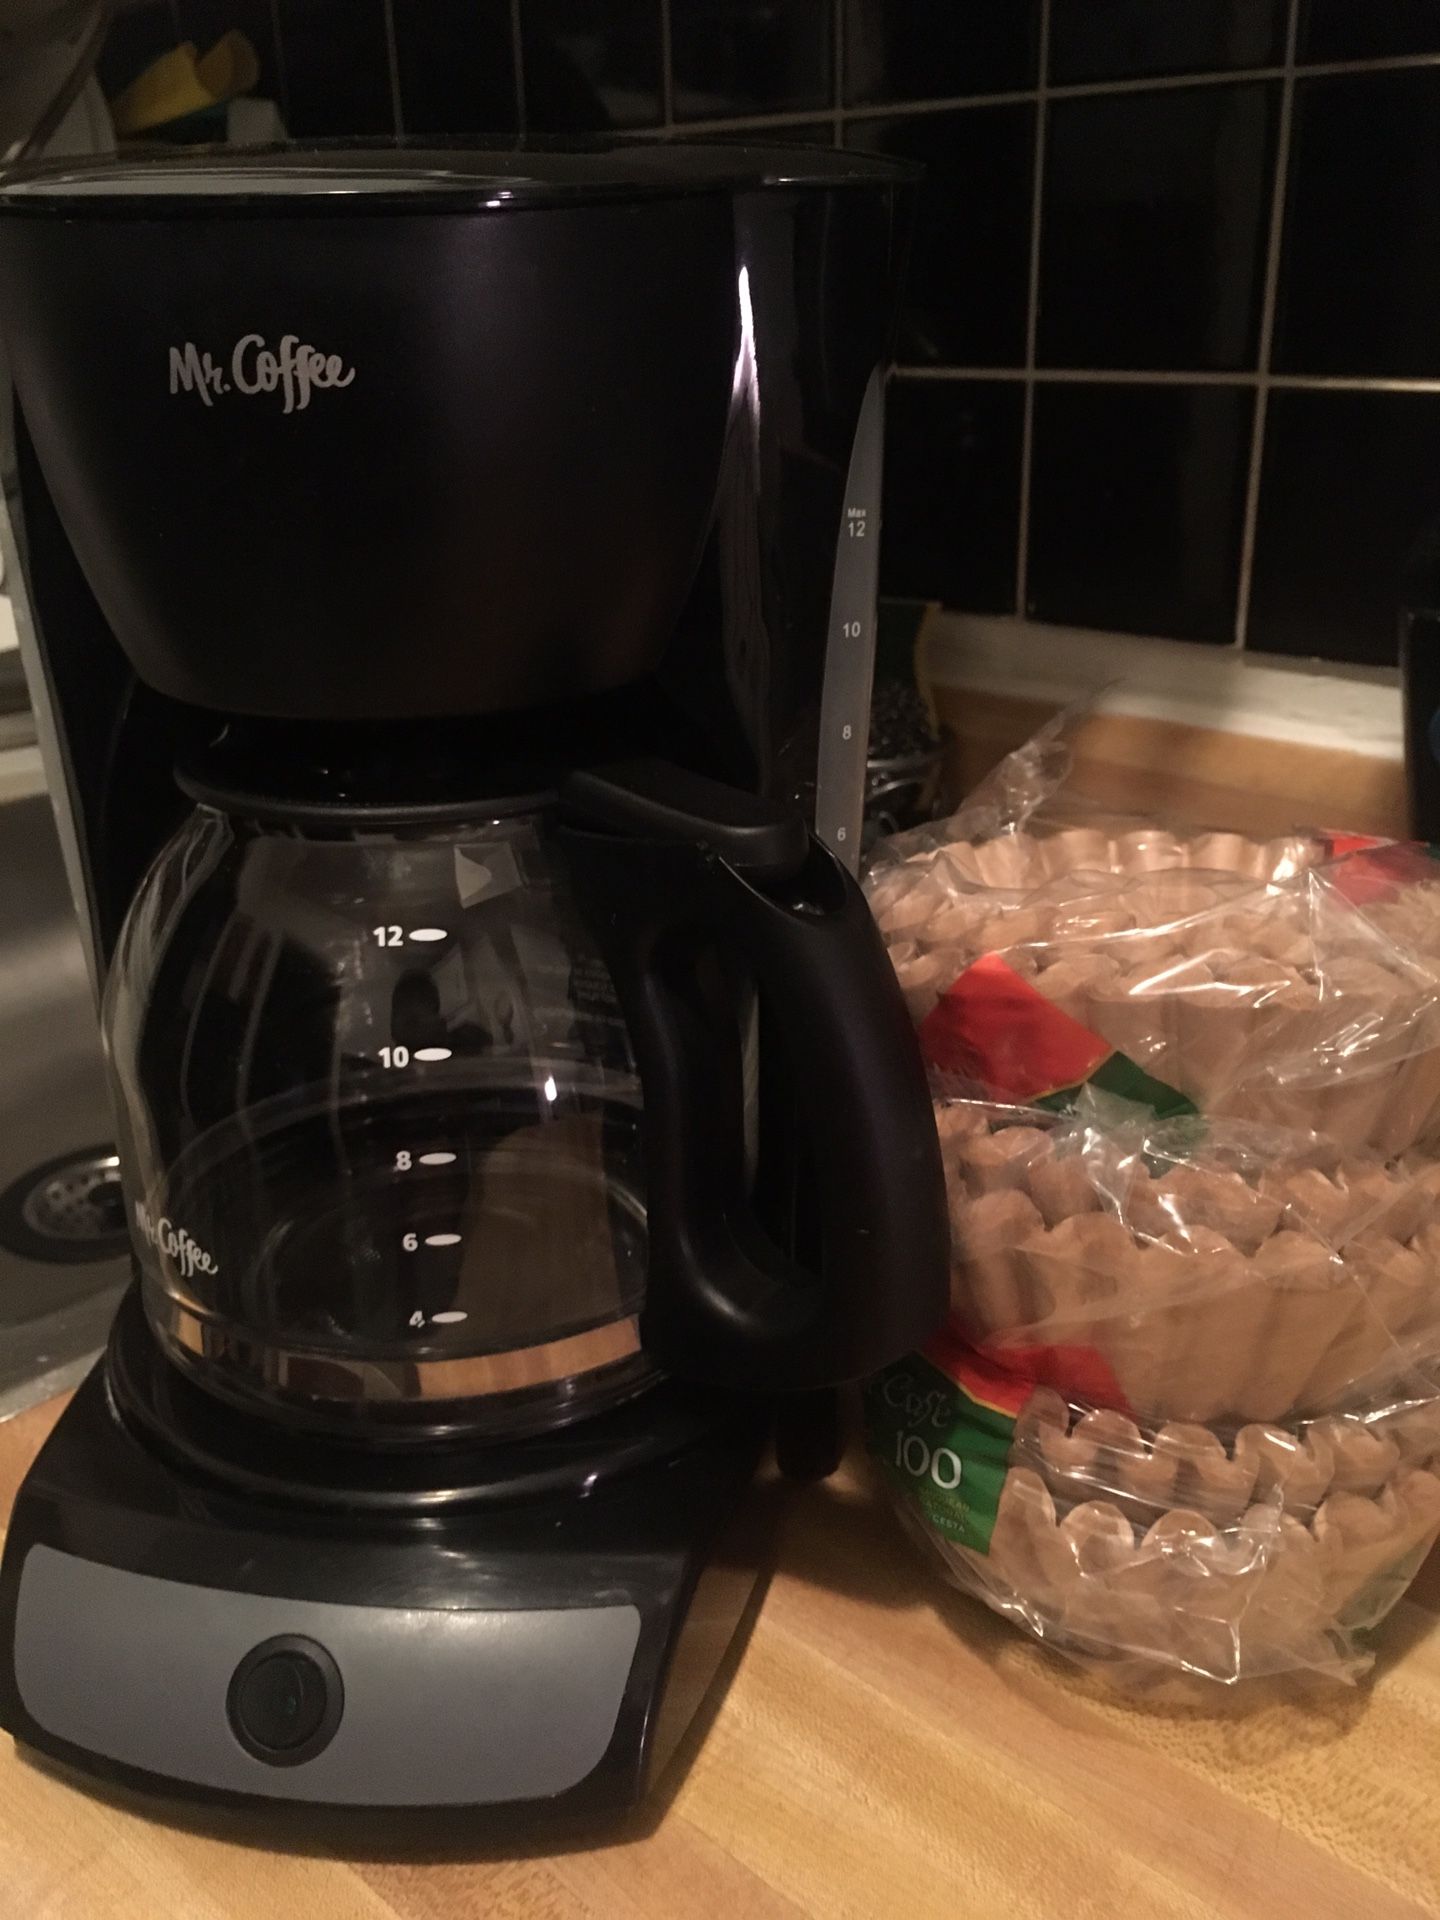 Mr. Coffee Maker (free 300 unopened Melitta Filters)